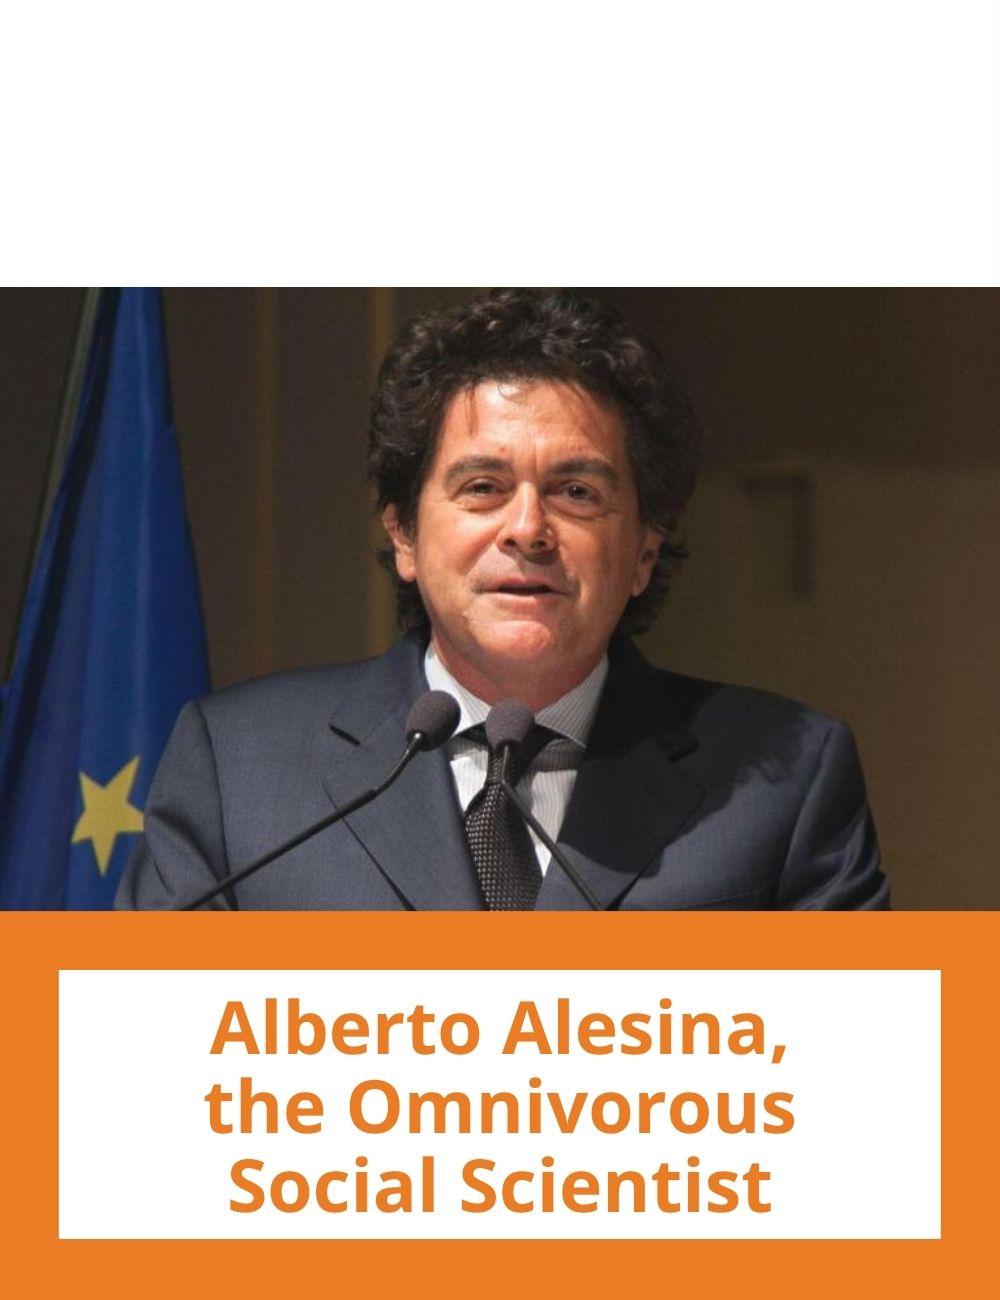 Link to related stories. Image: a photo of Alberto Alesina. Story headline: Alberto Alesina, the Omnivorous Social Scientist